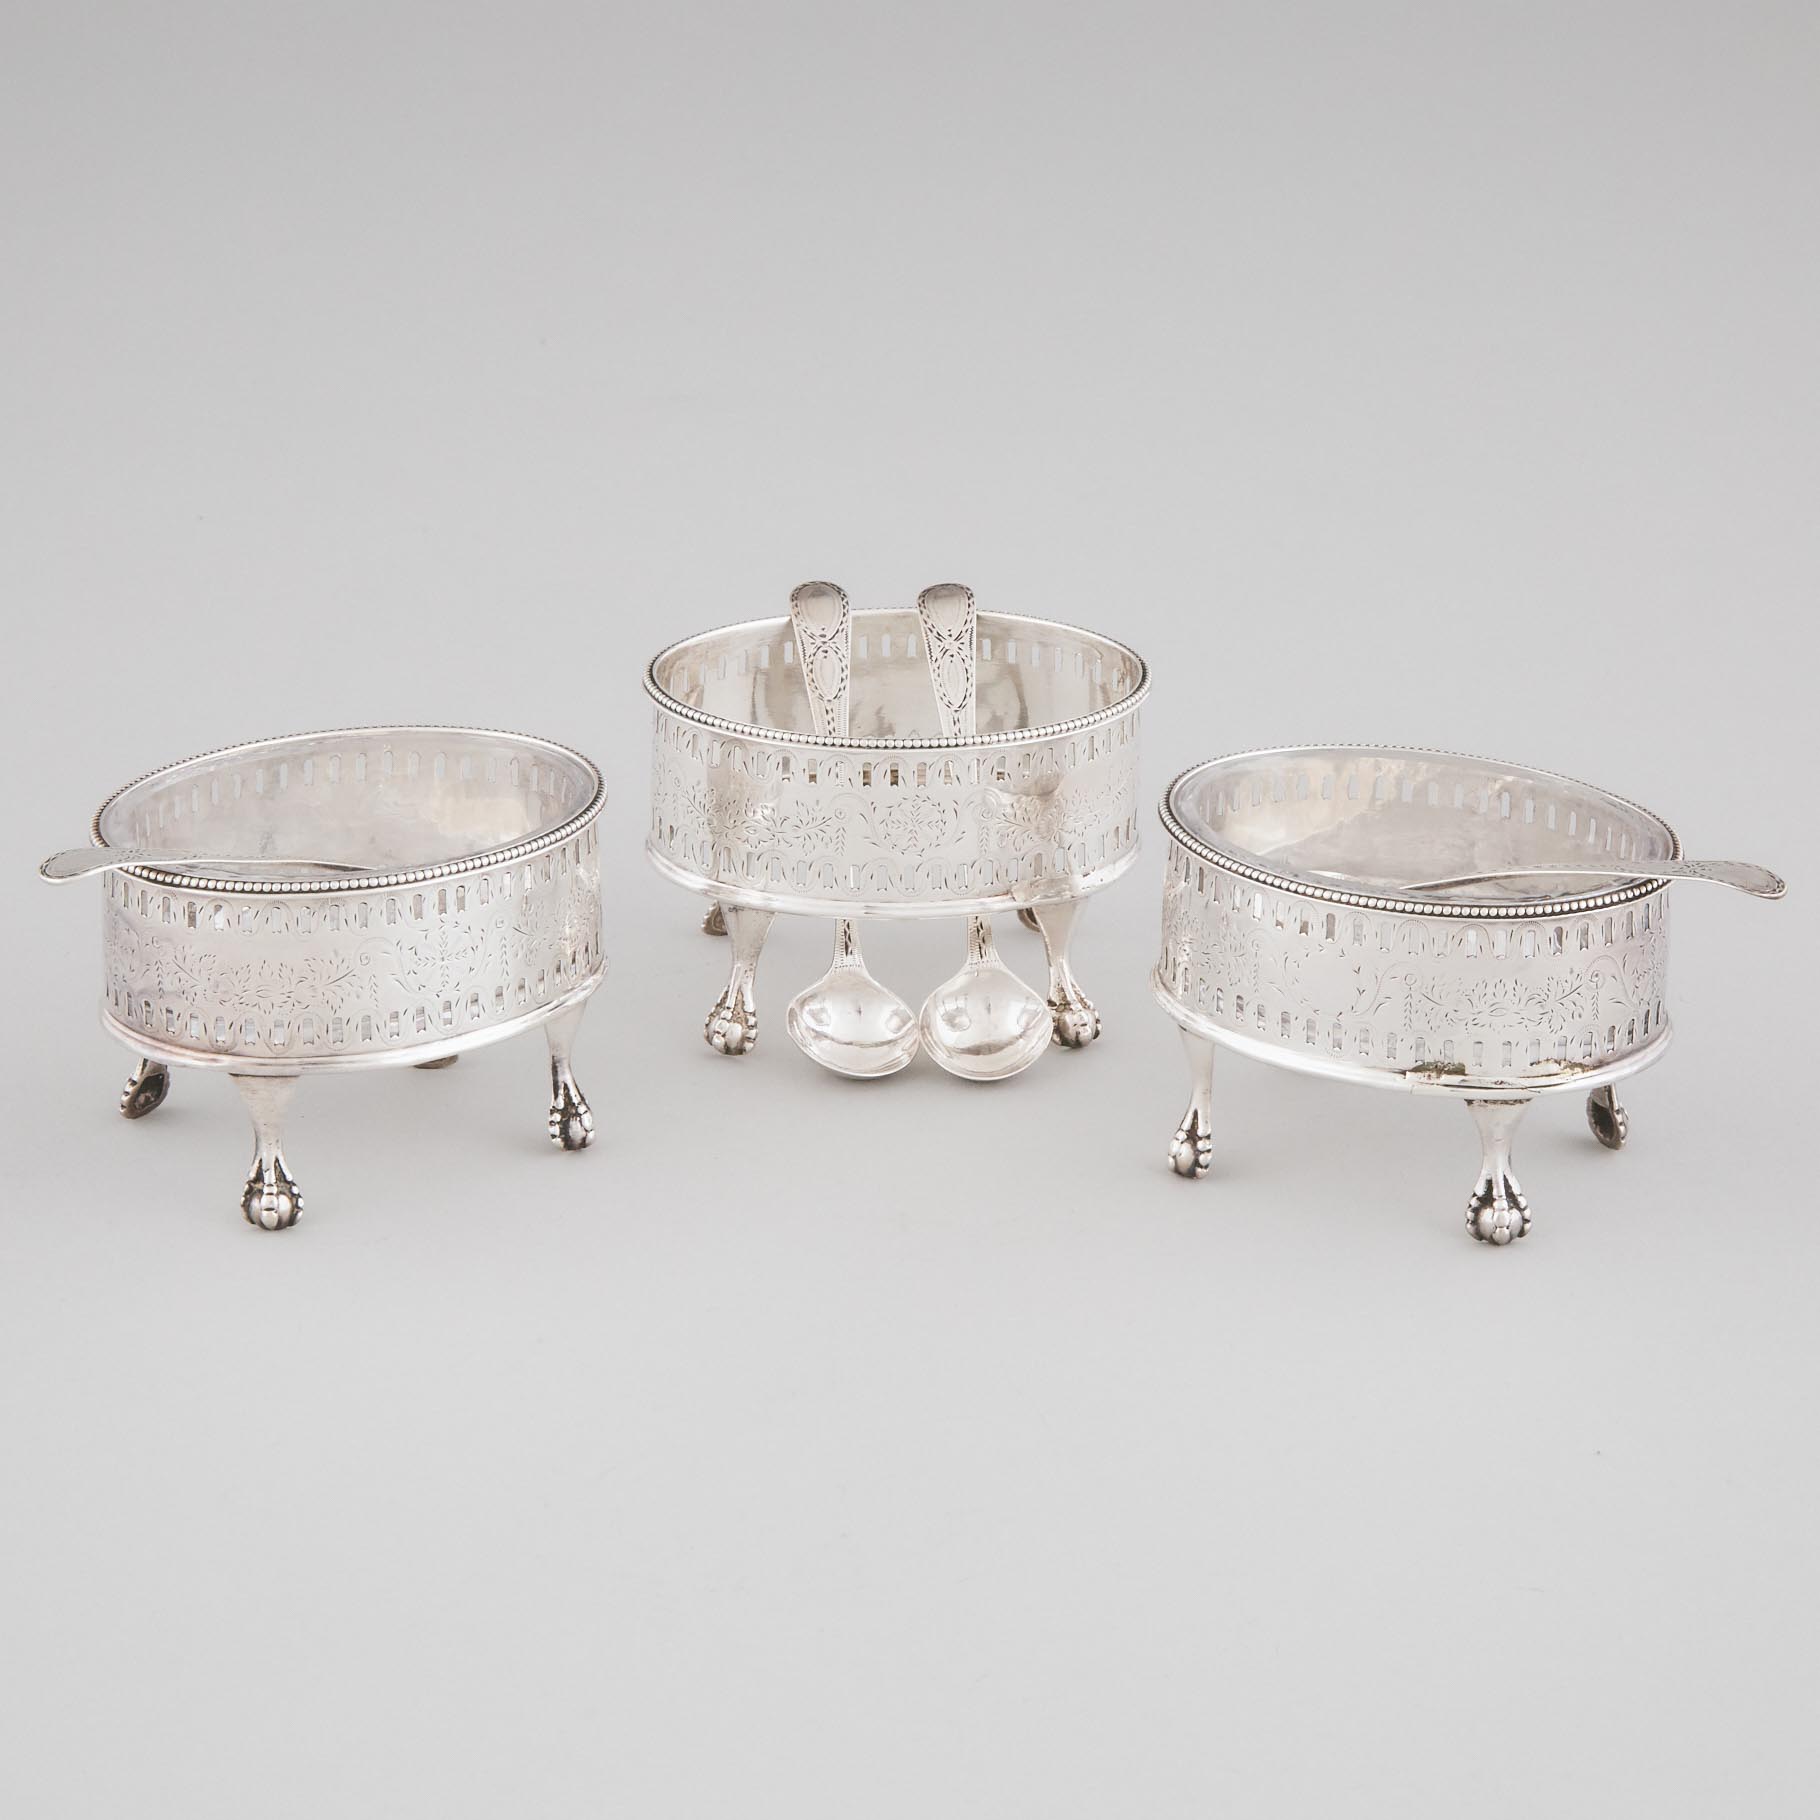 Three George III Silver Oval Salt Cellars, James Waters, London, 1787 and Four Spoons, Hester Bateman, 1788